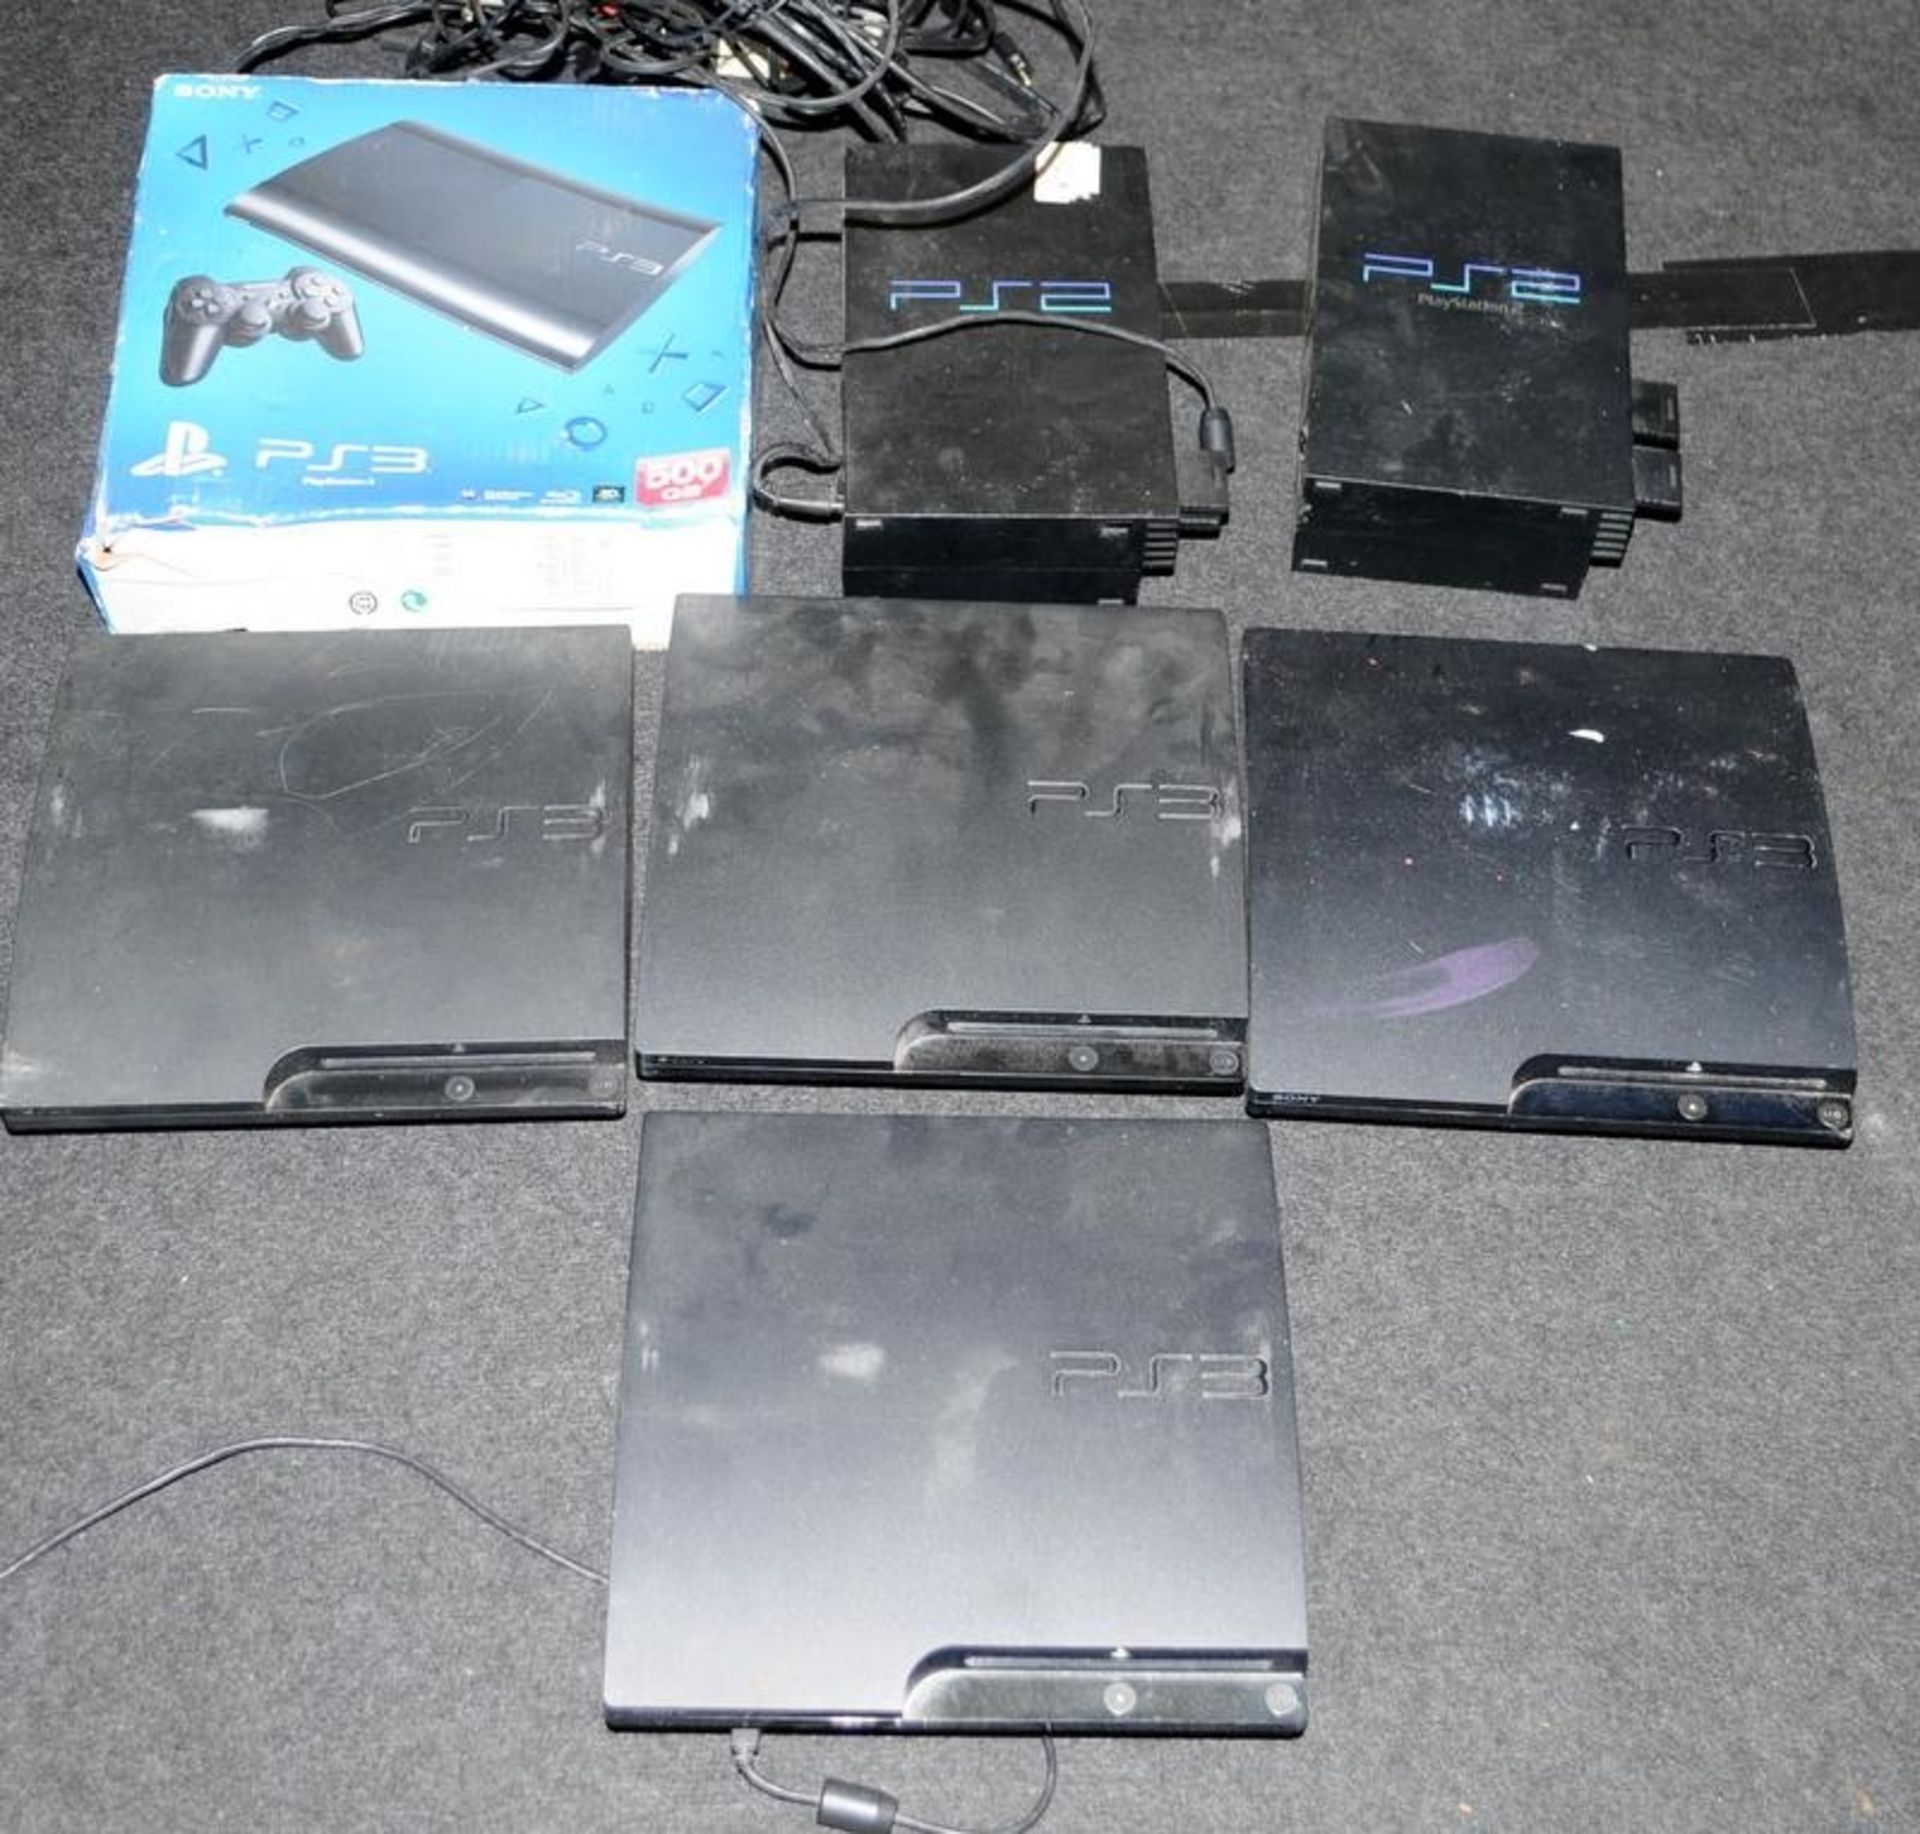 A carton of Playstation 2 and Playstation 3's